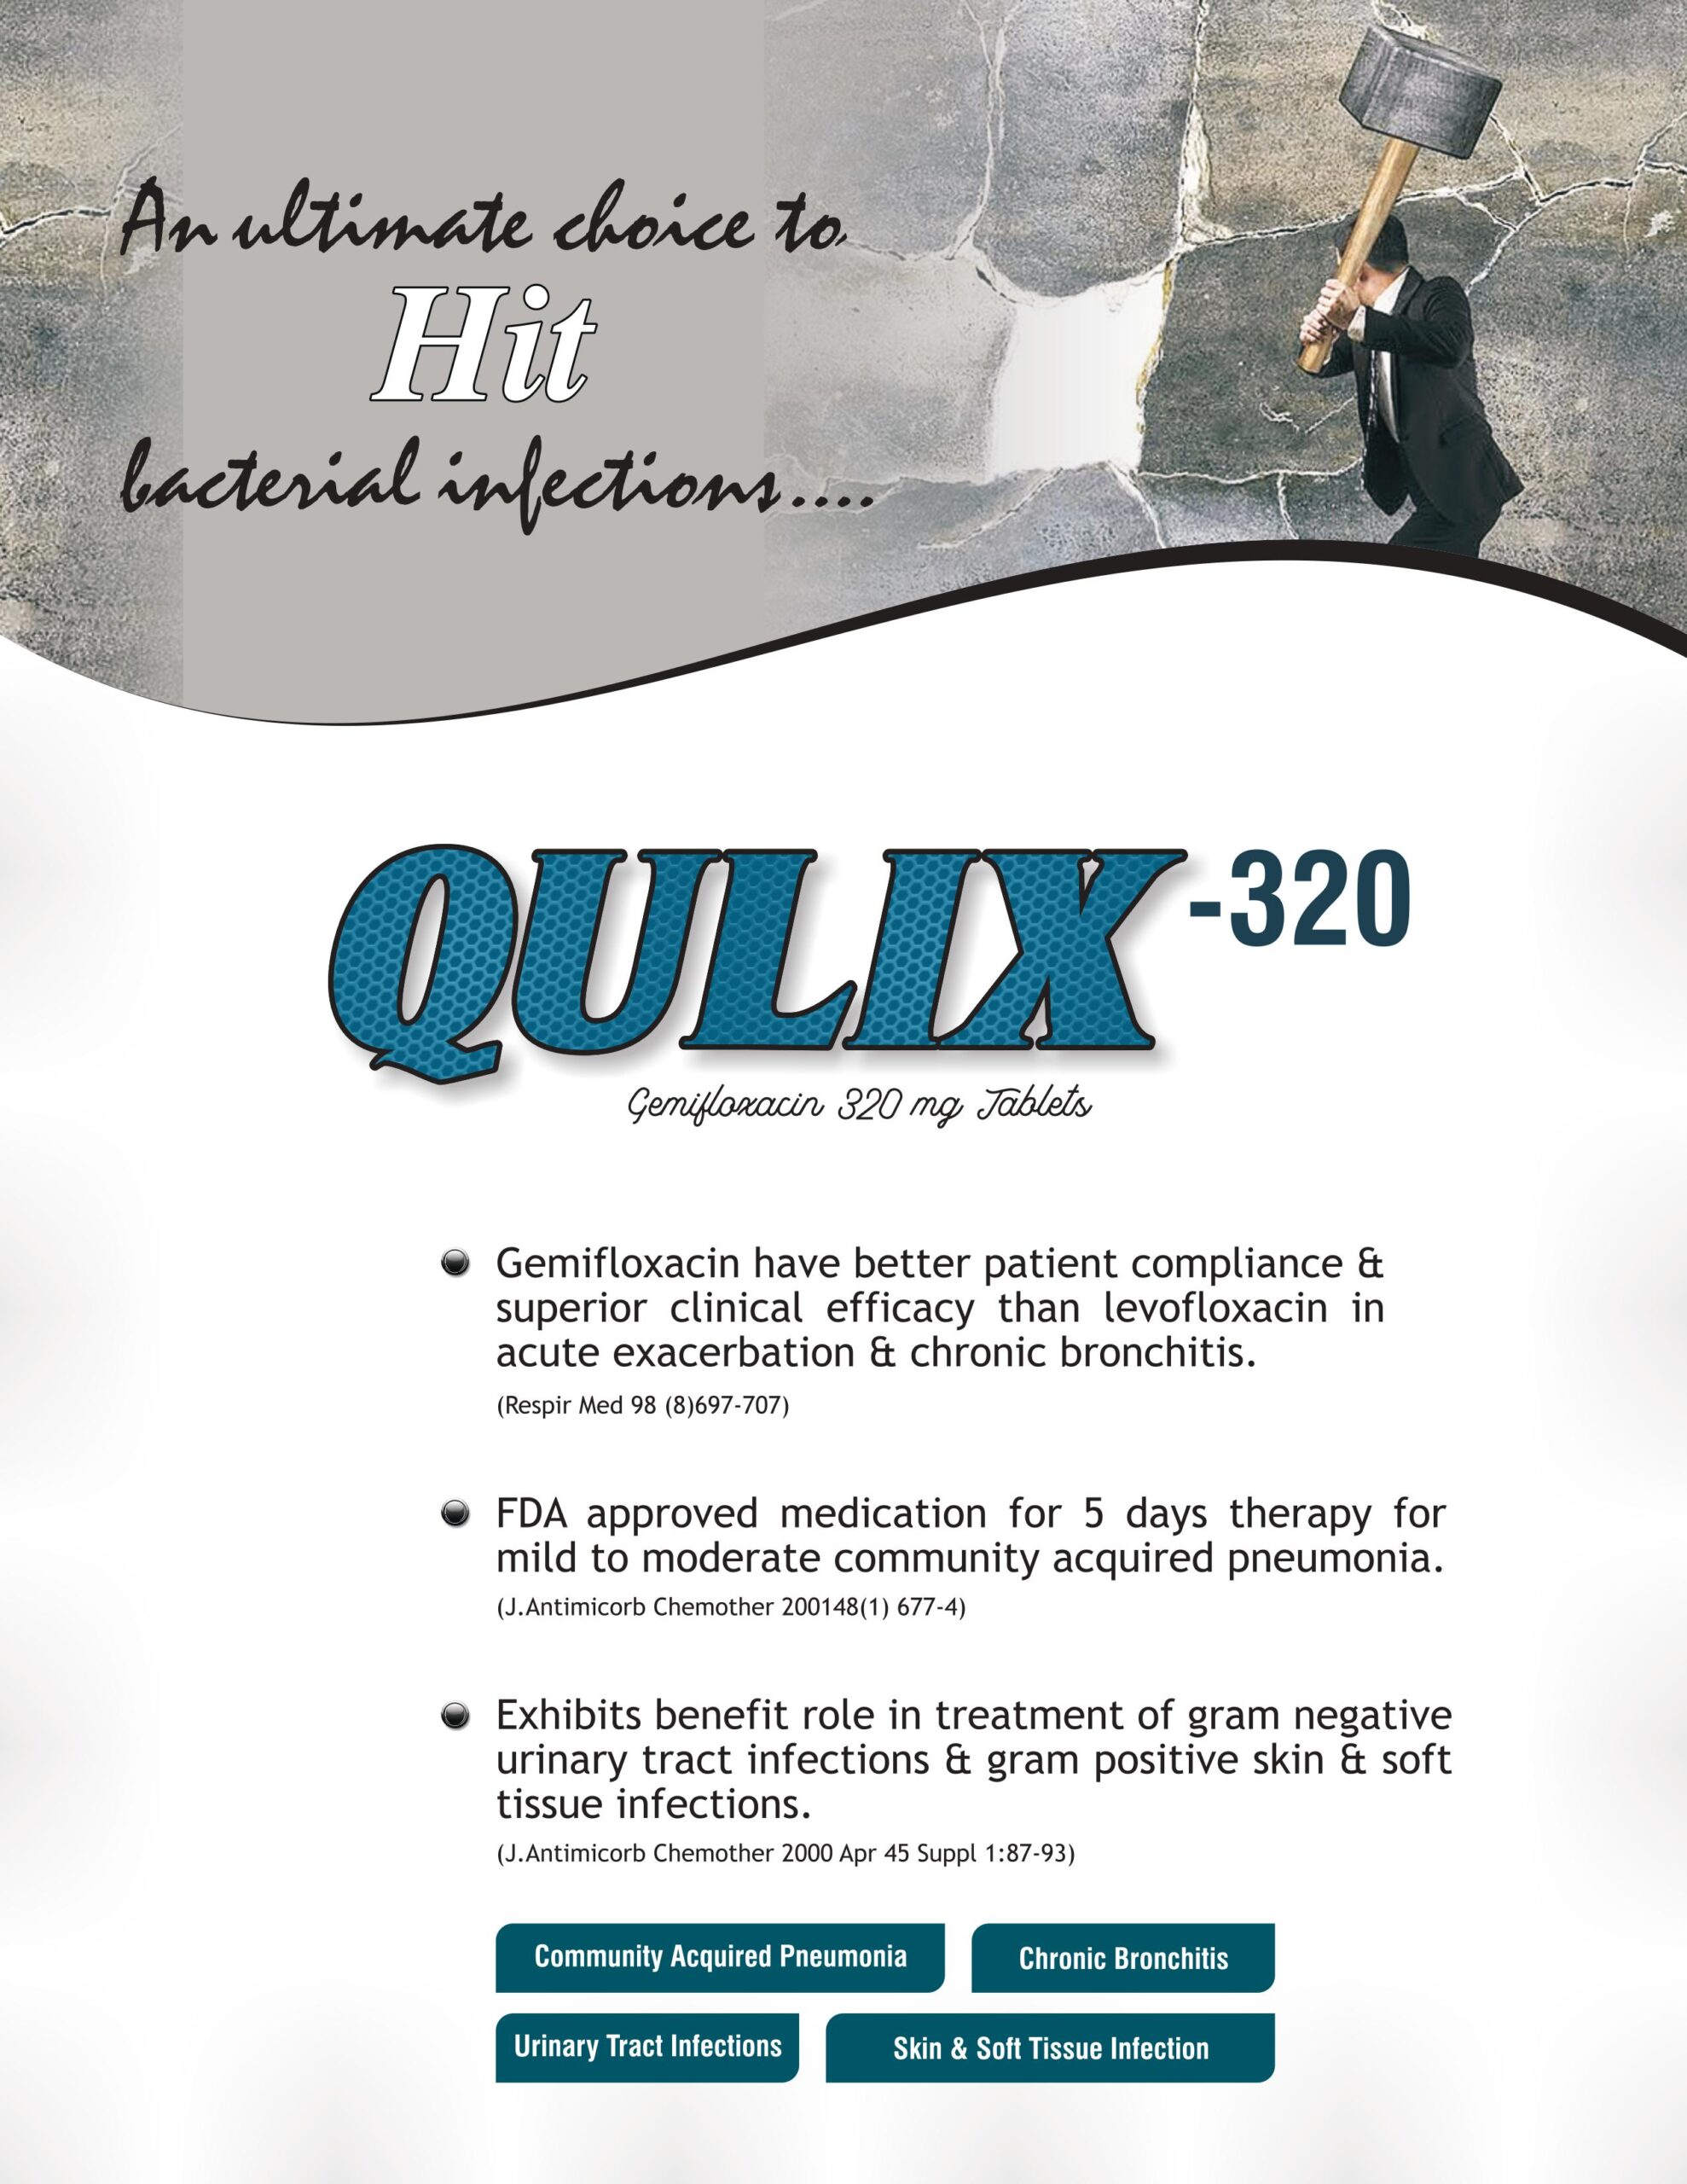 Qulix,allengeindia